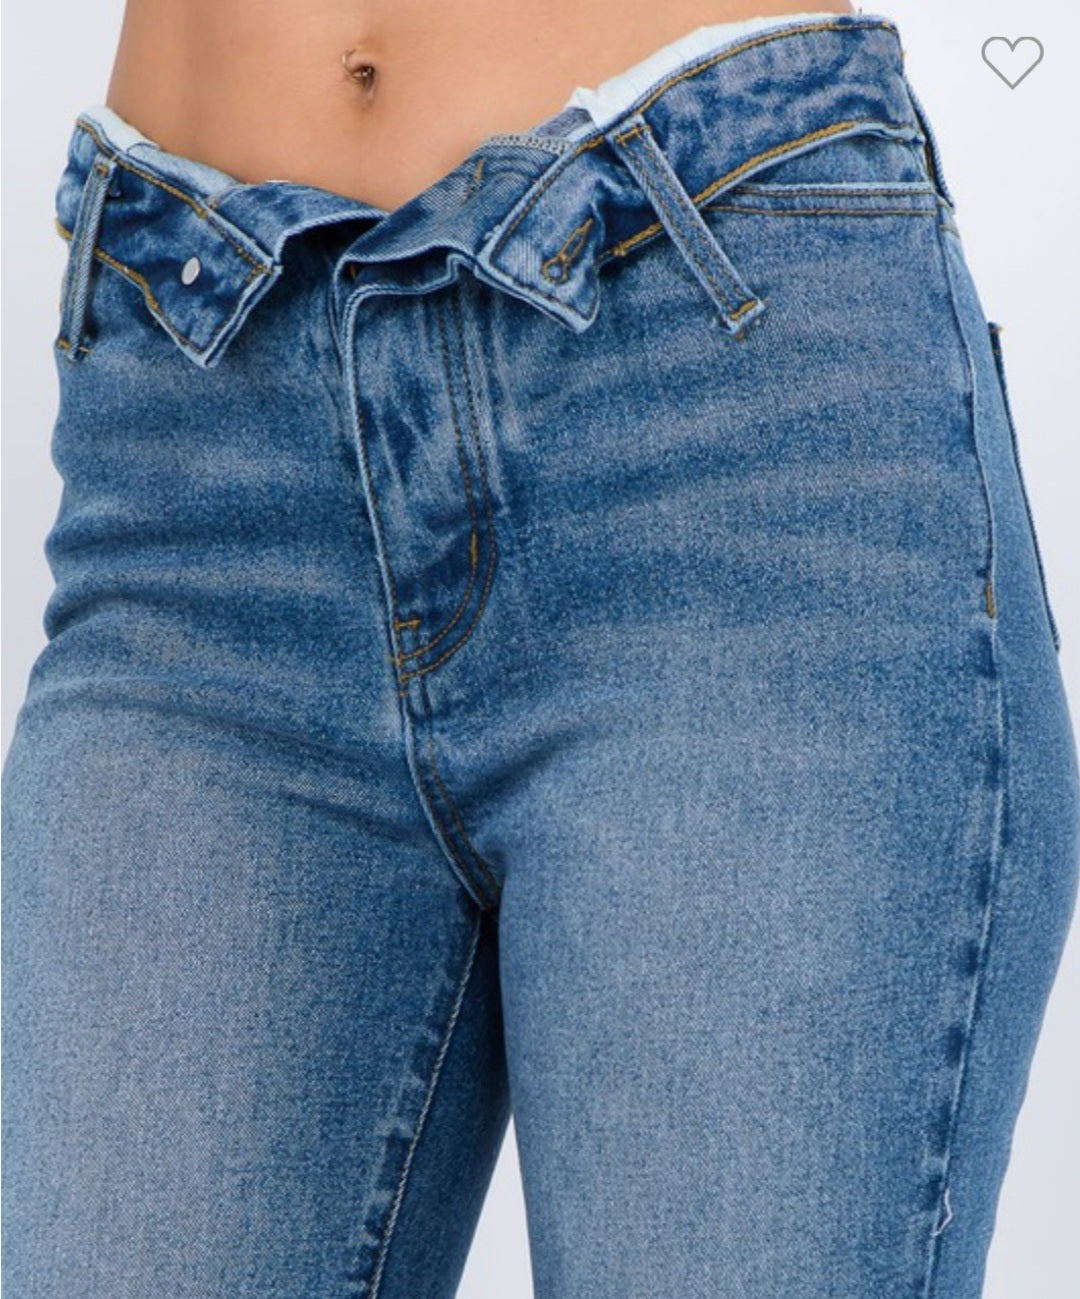 Double take flipped down waist denim jeans